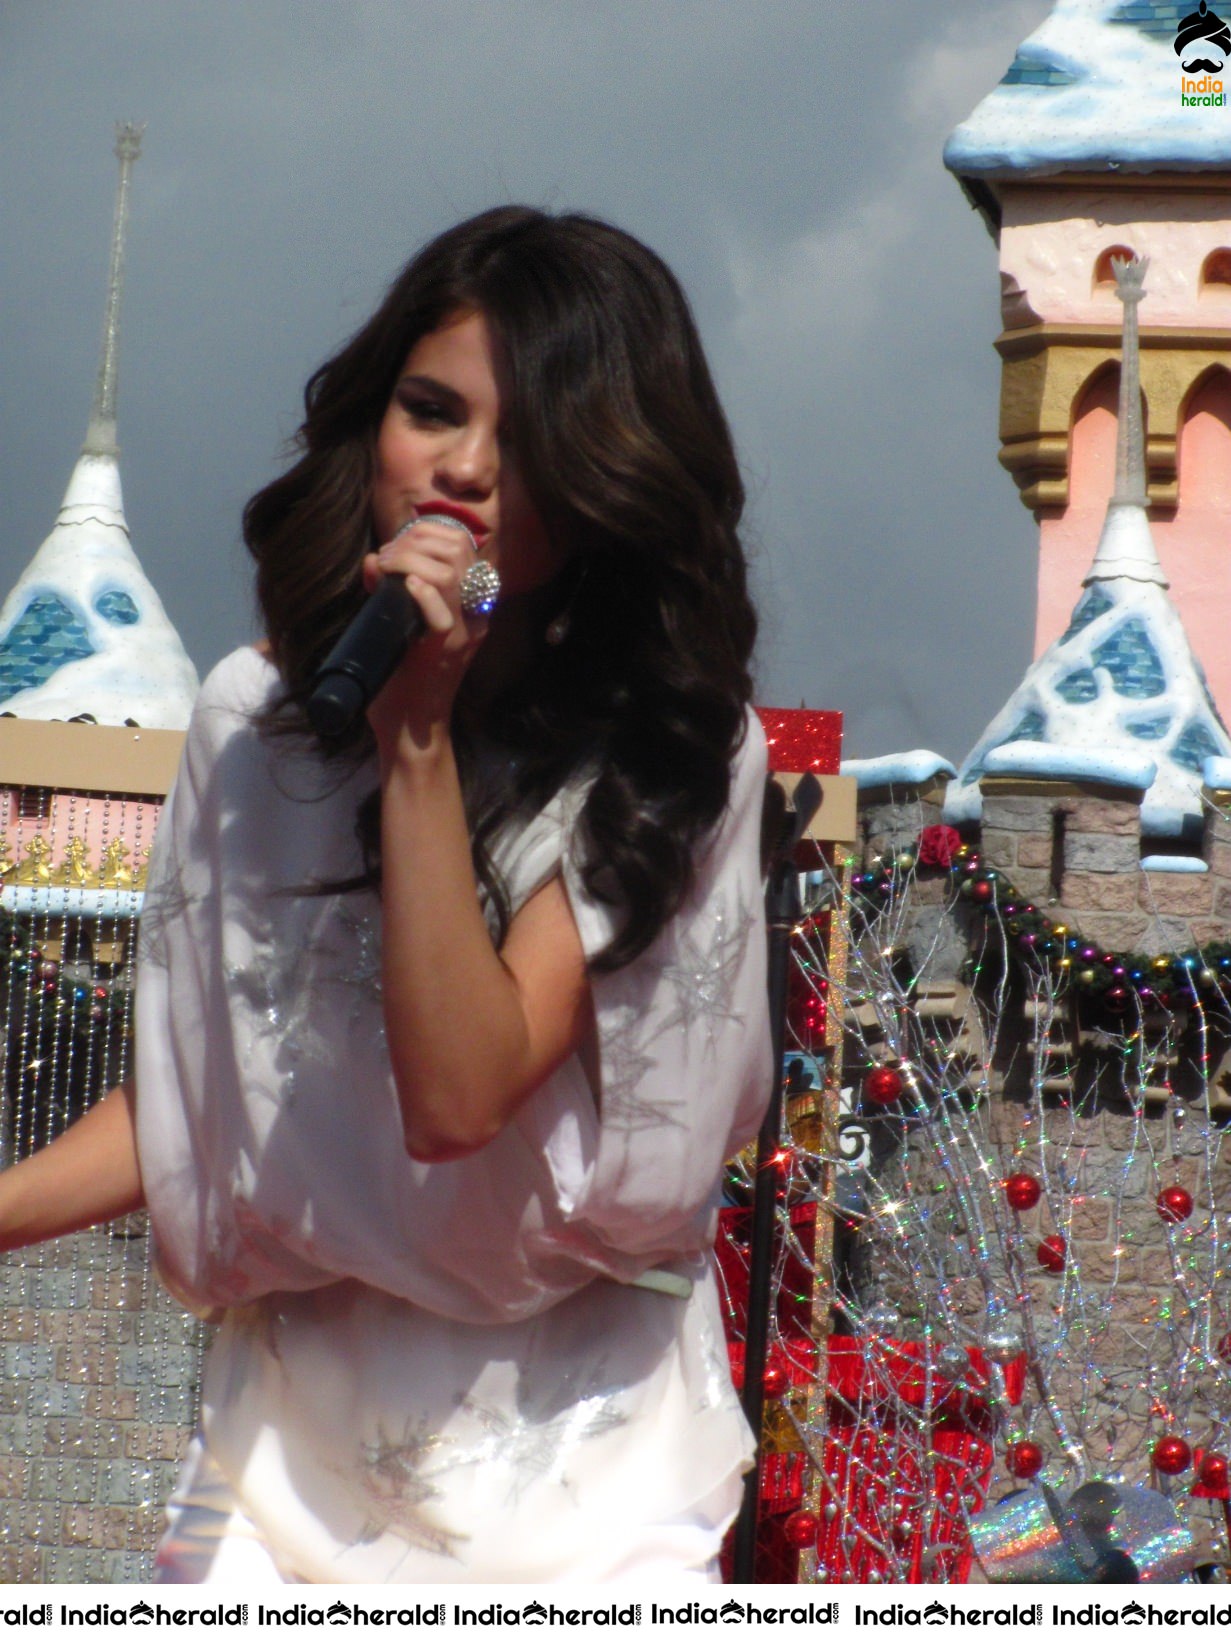 Selena Gomez performs before a huge crowd at Disneyland